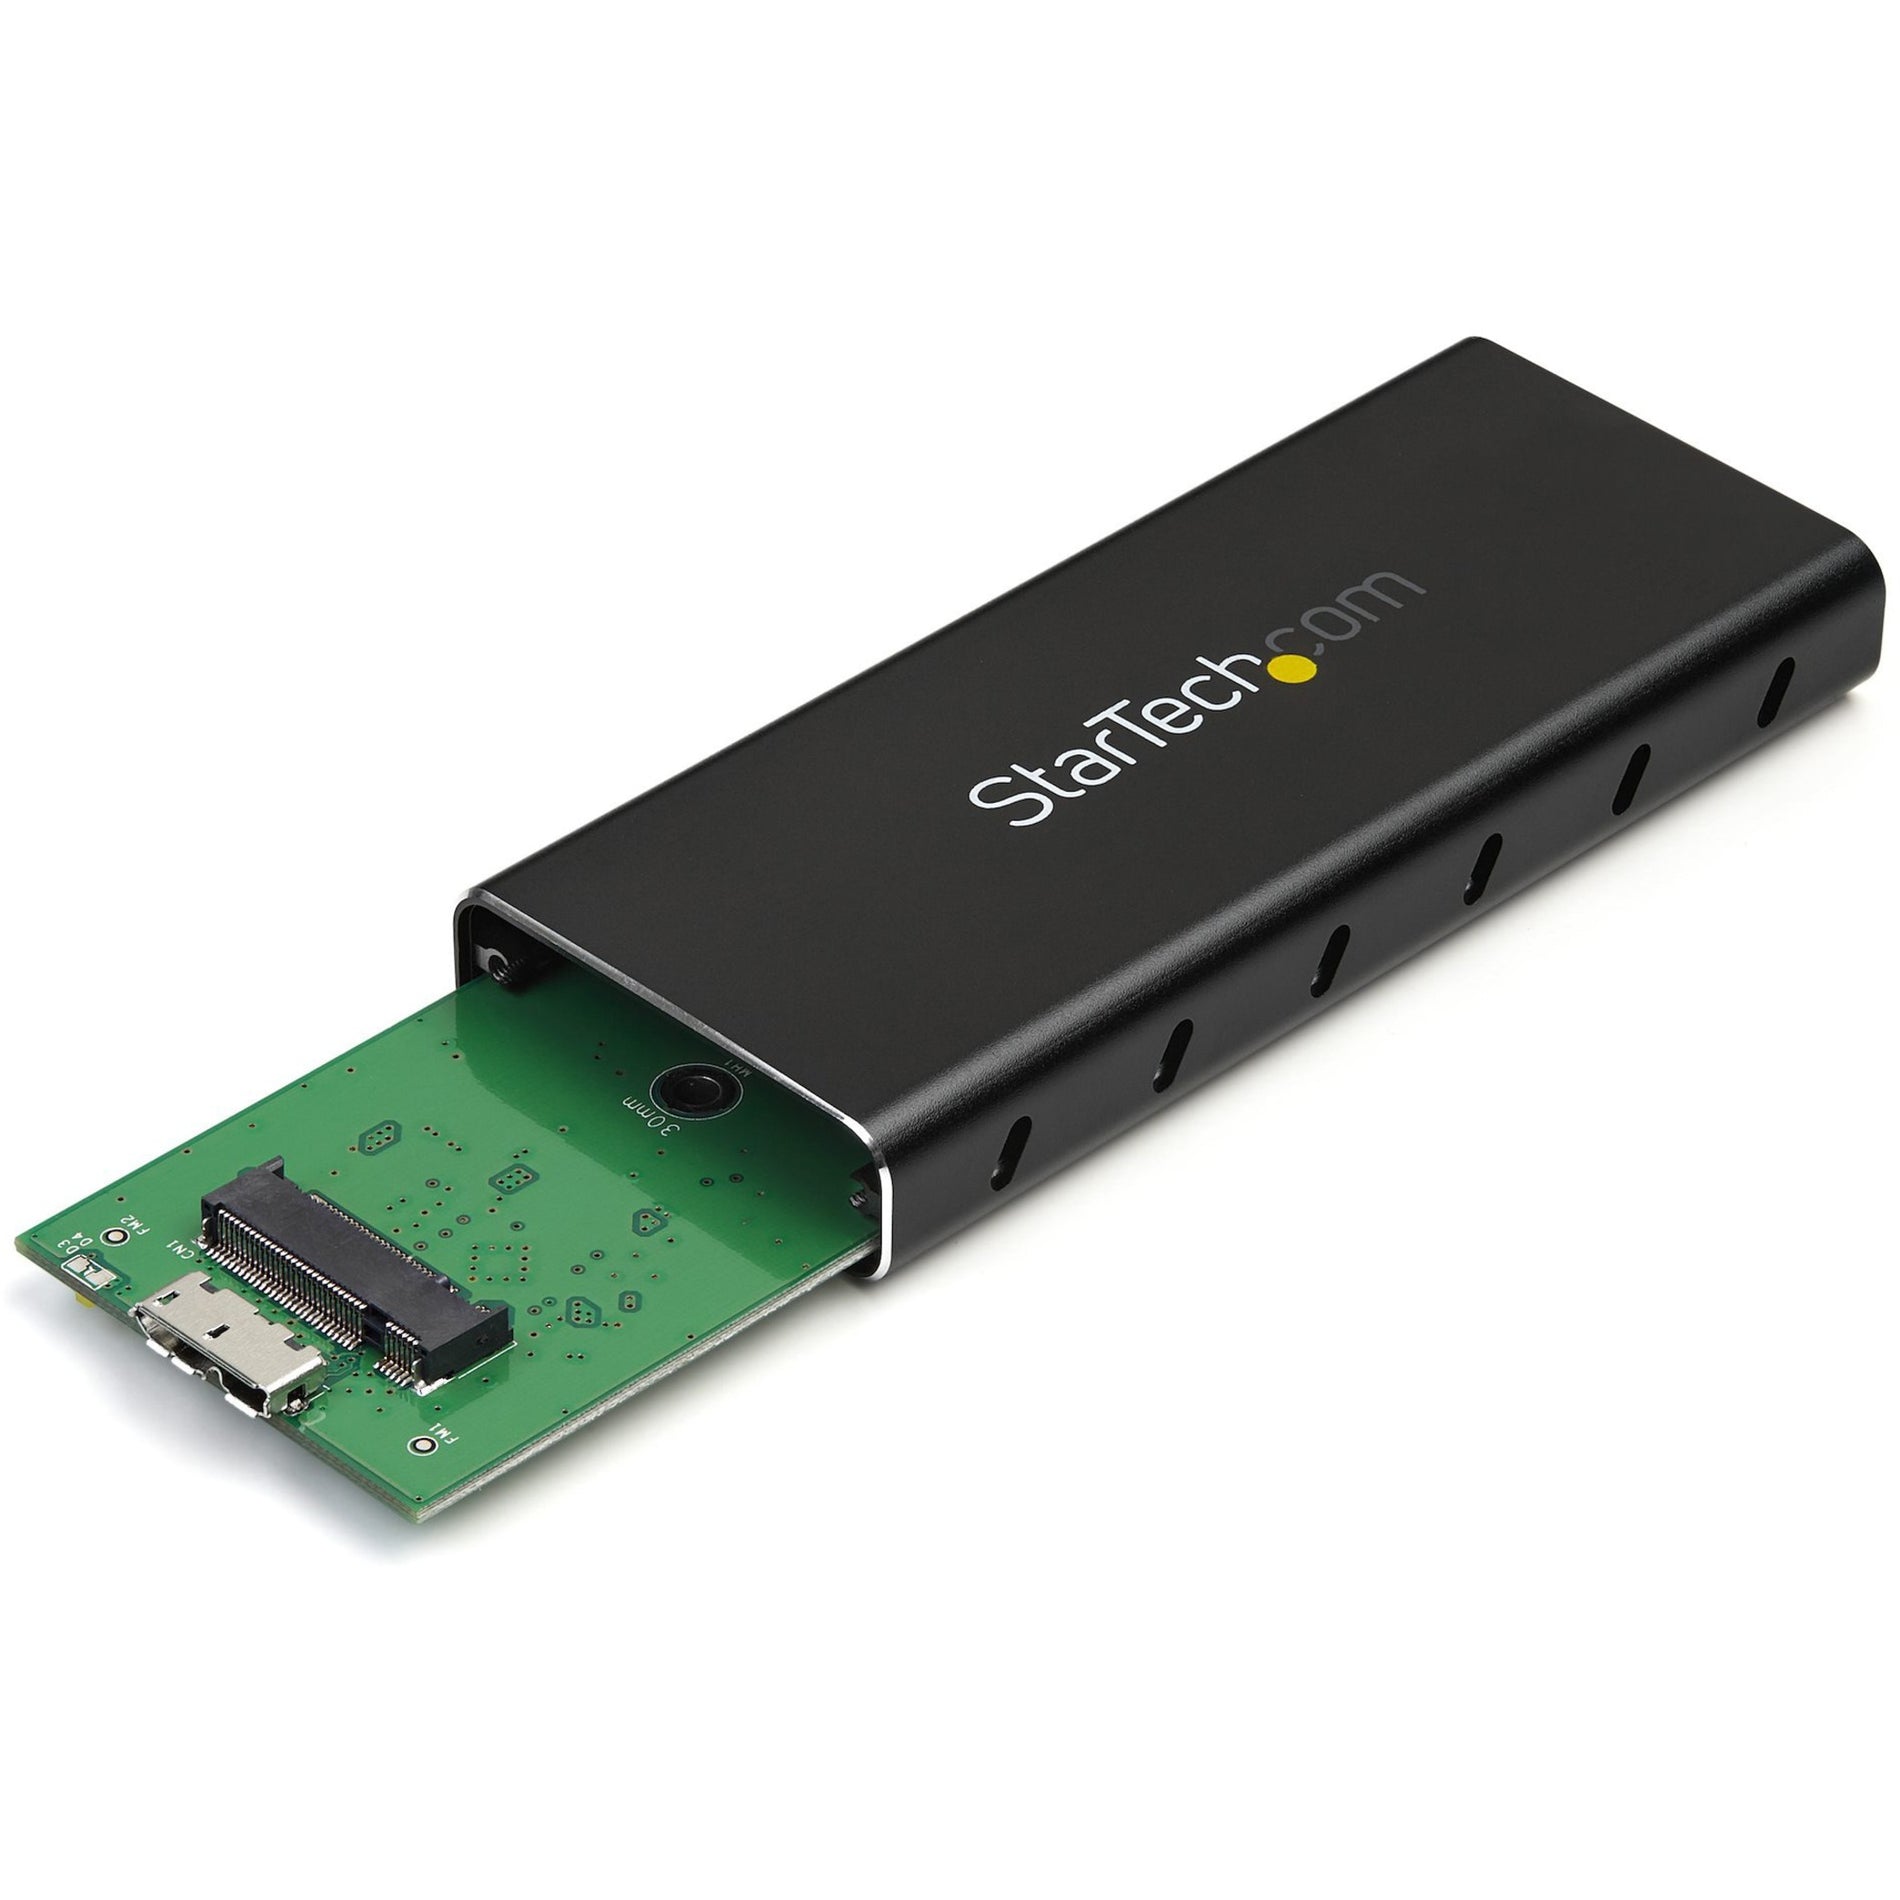 StarTech.com SM21BMU31C3 M.2 NGFF SATA Enclosure - USB 3.1, Portable Aluminum SSD Enclosure with USB C Cable